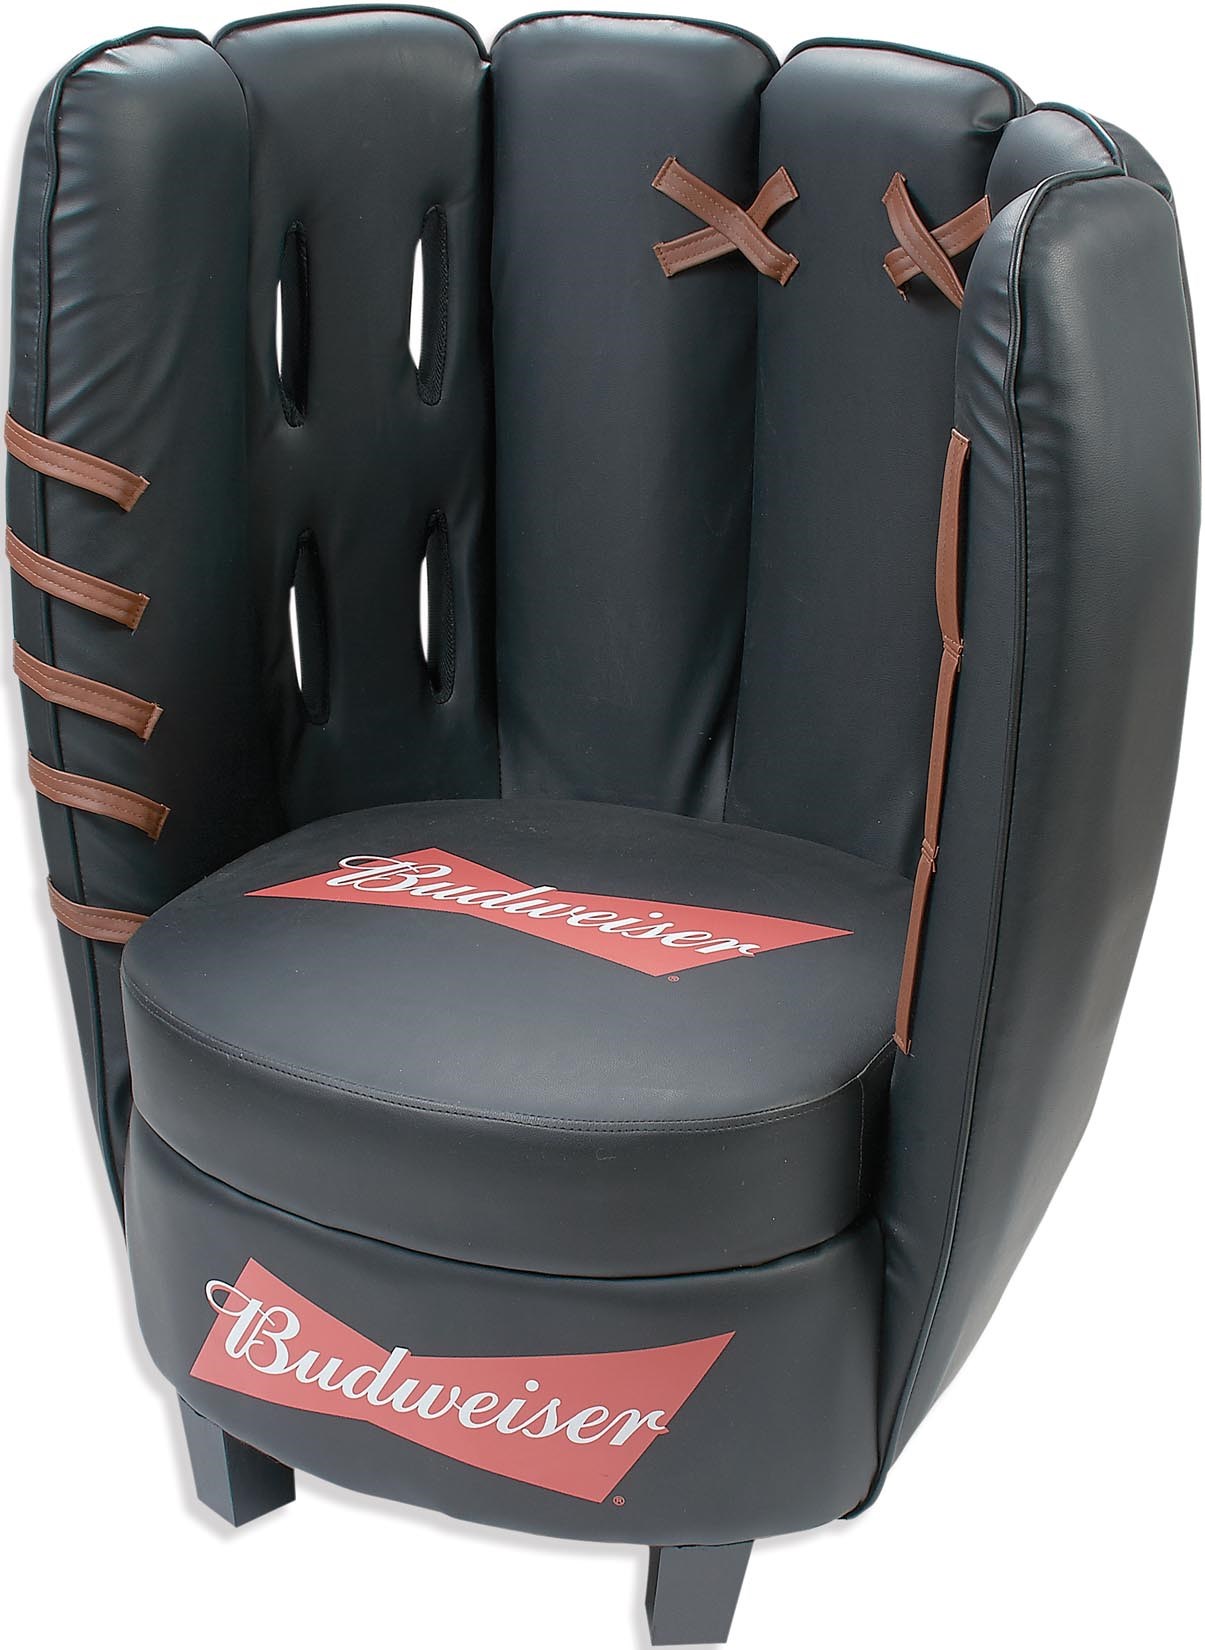 - Giant Budweiser Beer Promotional Baseball Glove Chair